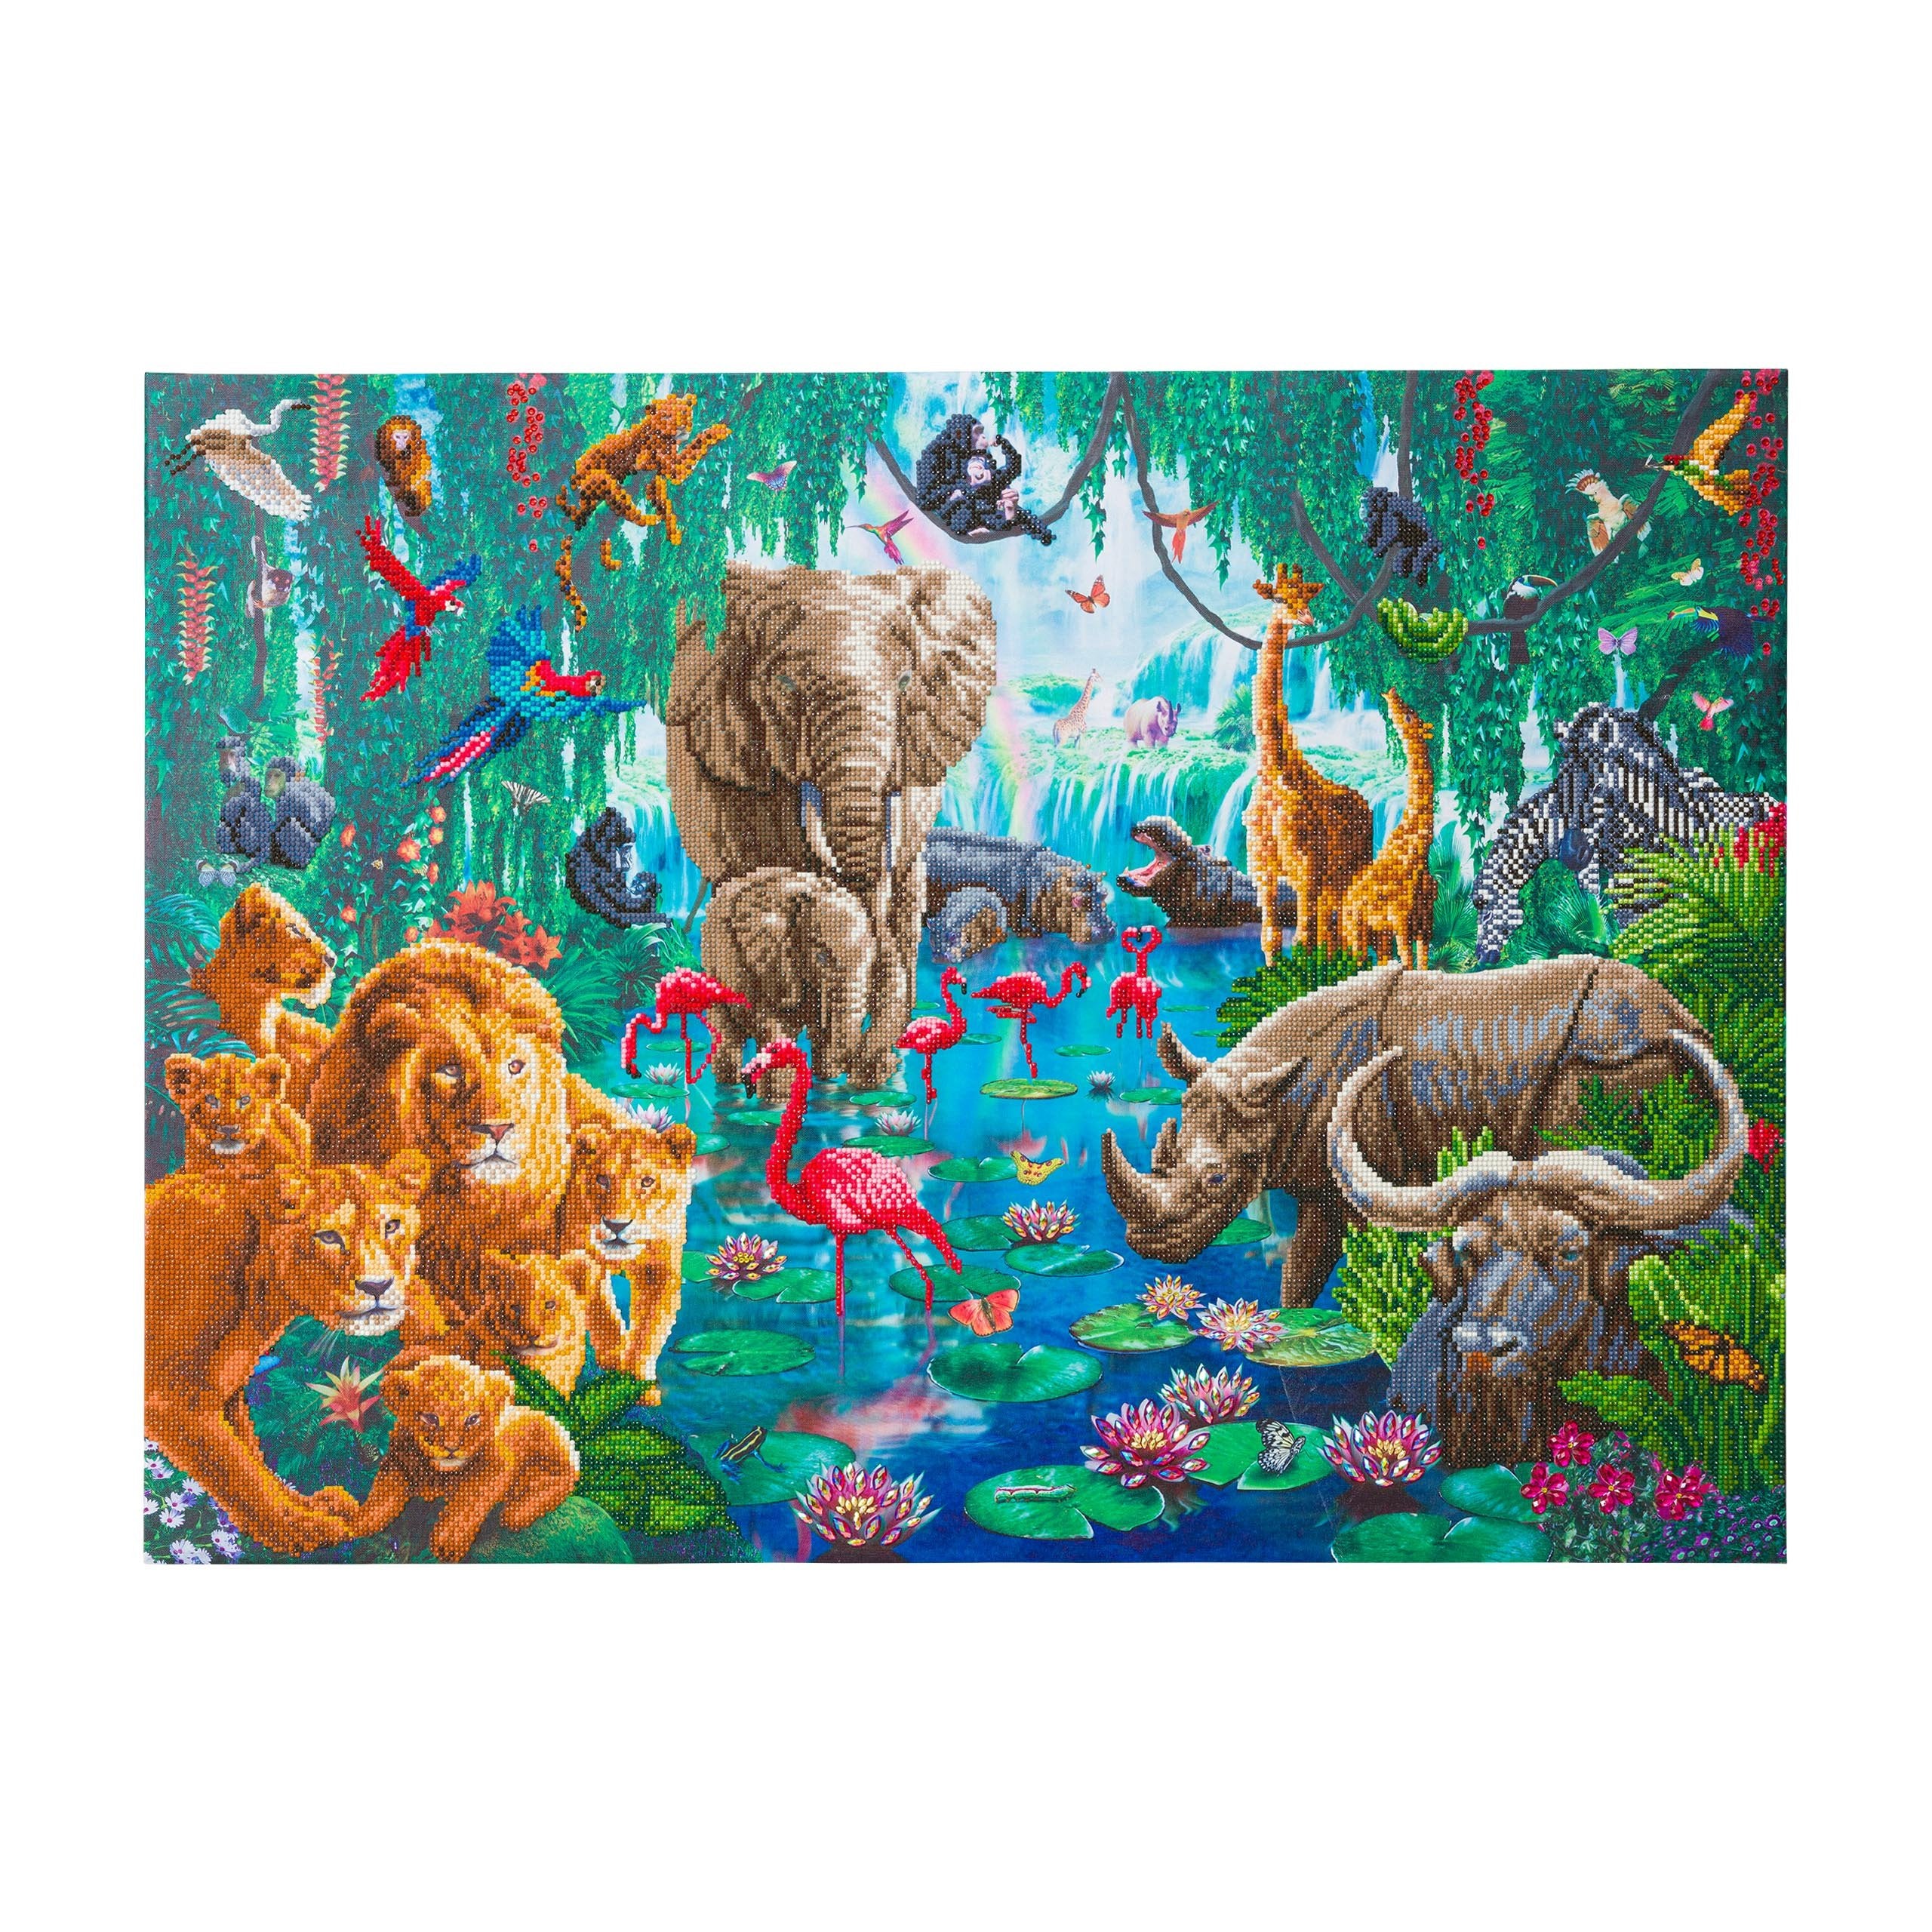 Jungle Crystal Art Canvas, 90cm X 65cm